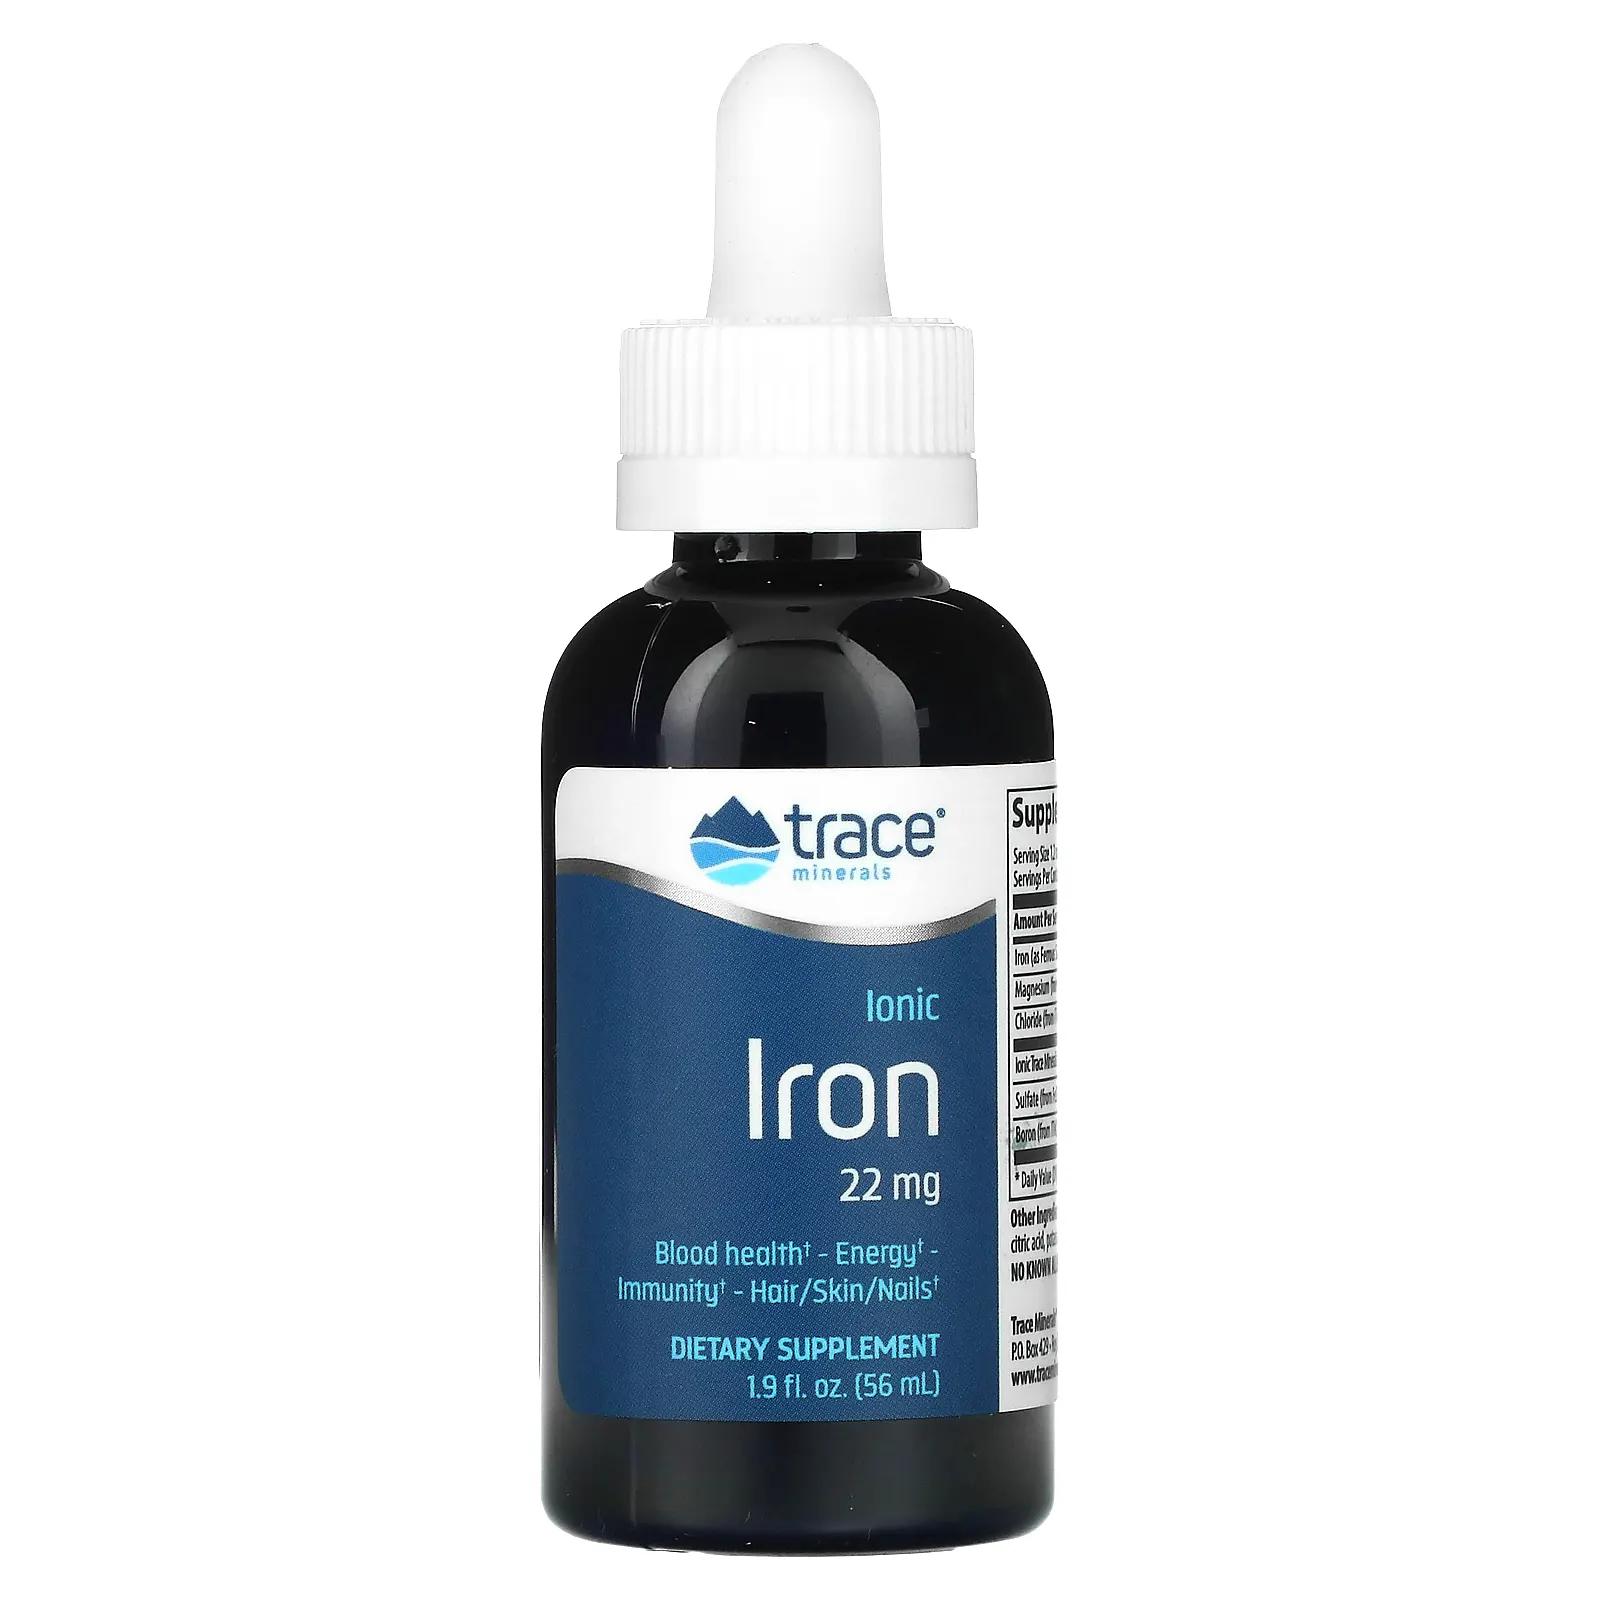 Trace Minerals Research Ионное железо 22 мг 59 мл (2 жидкие унции)